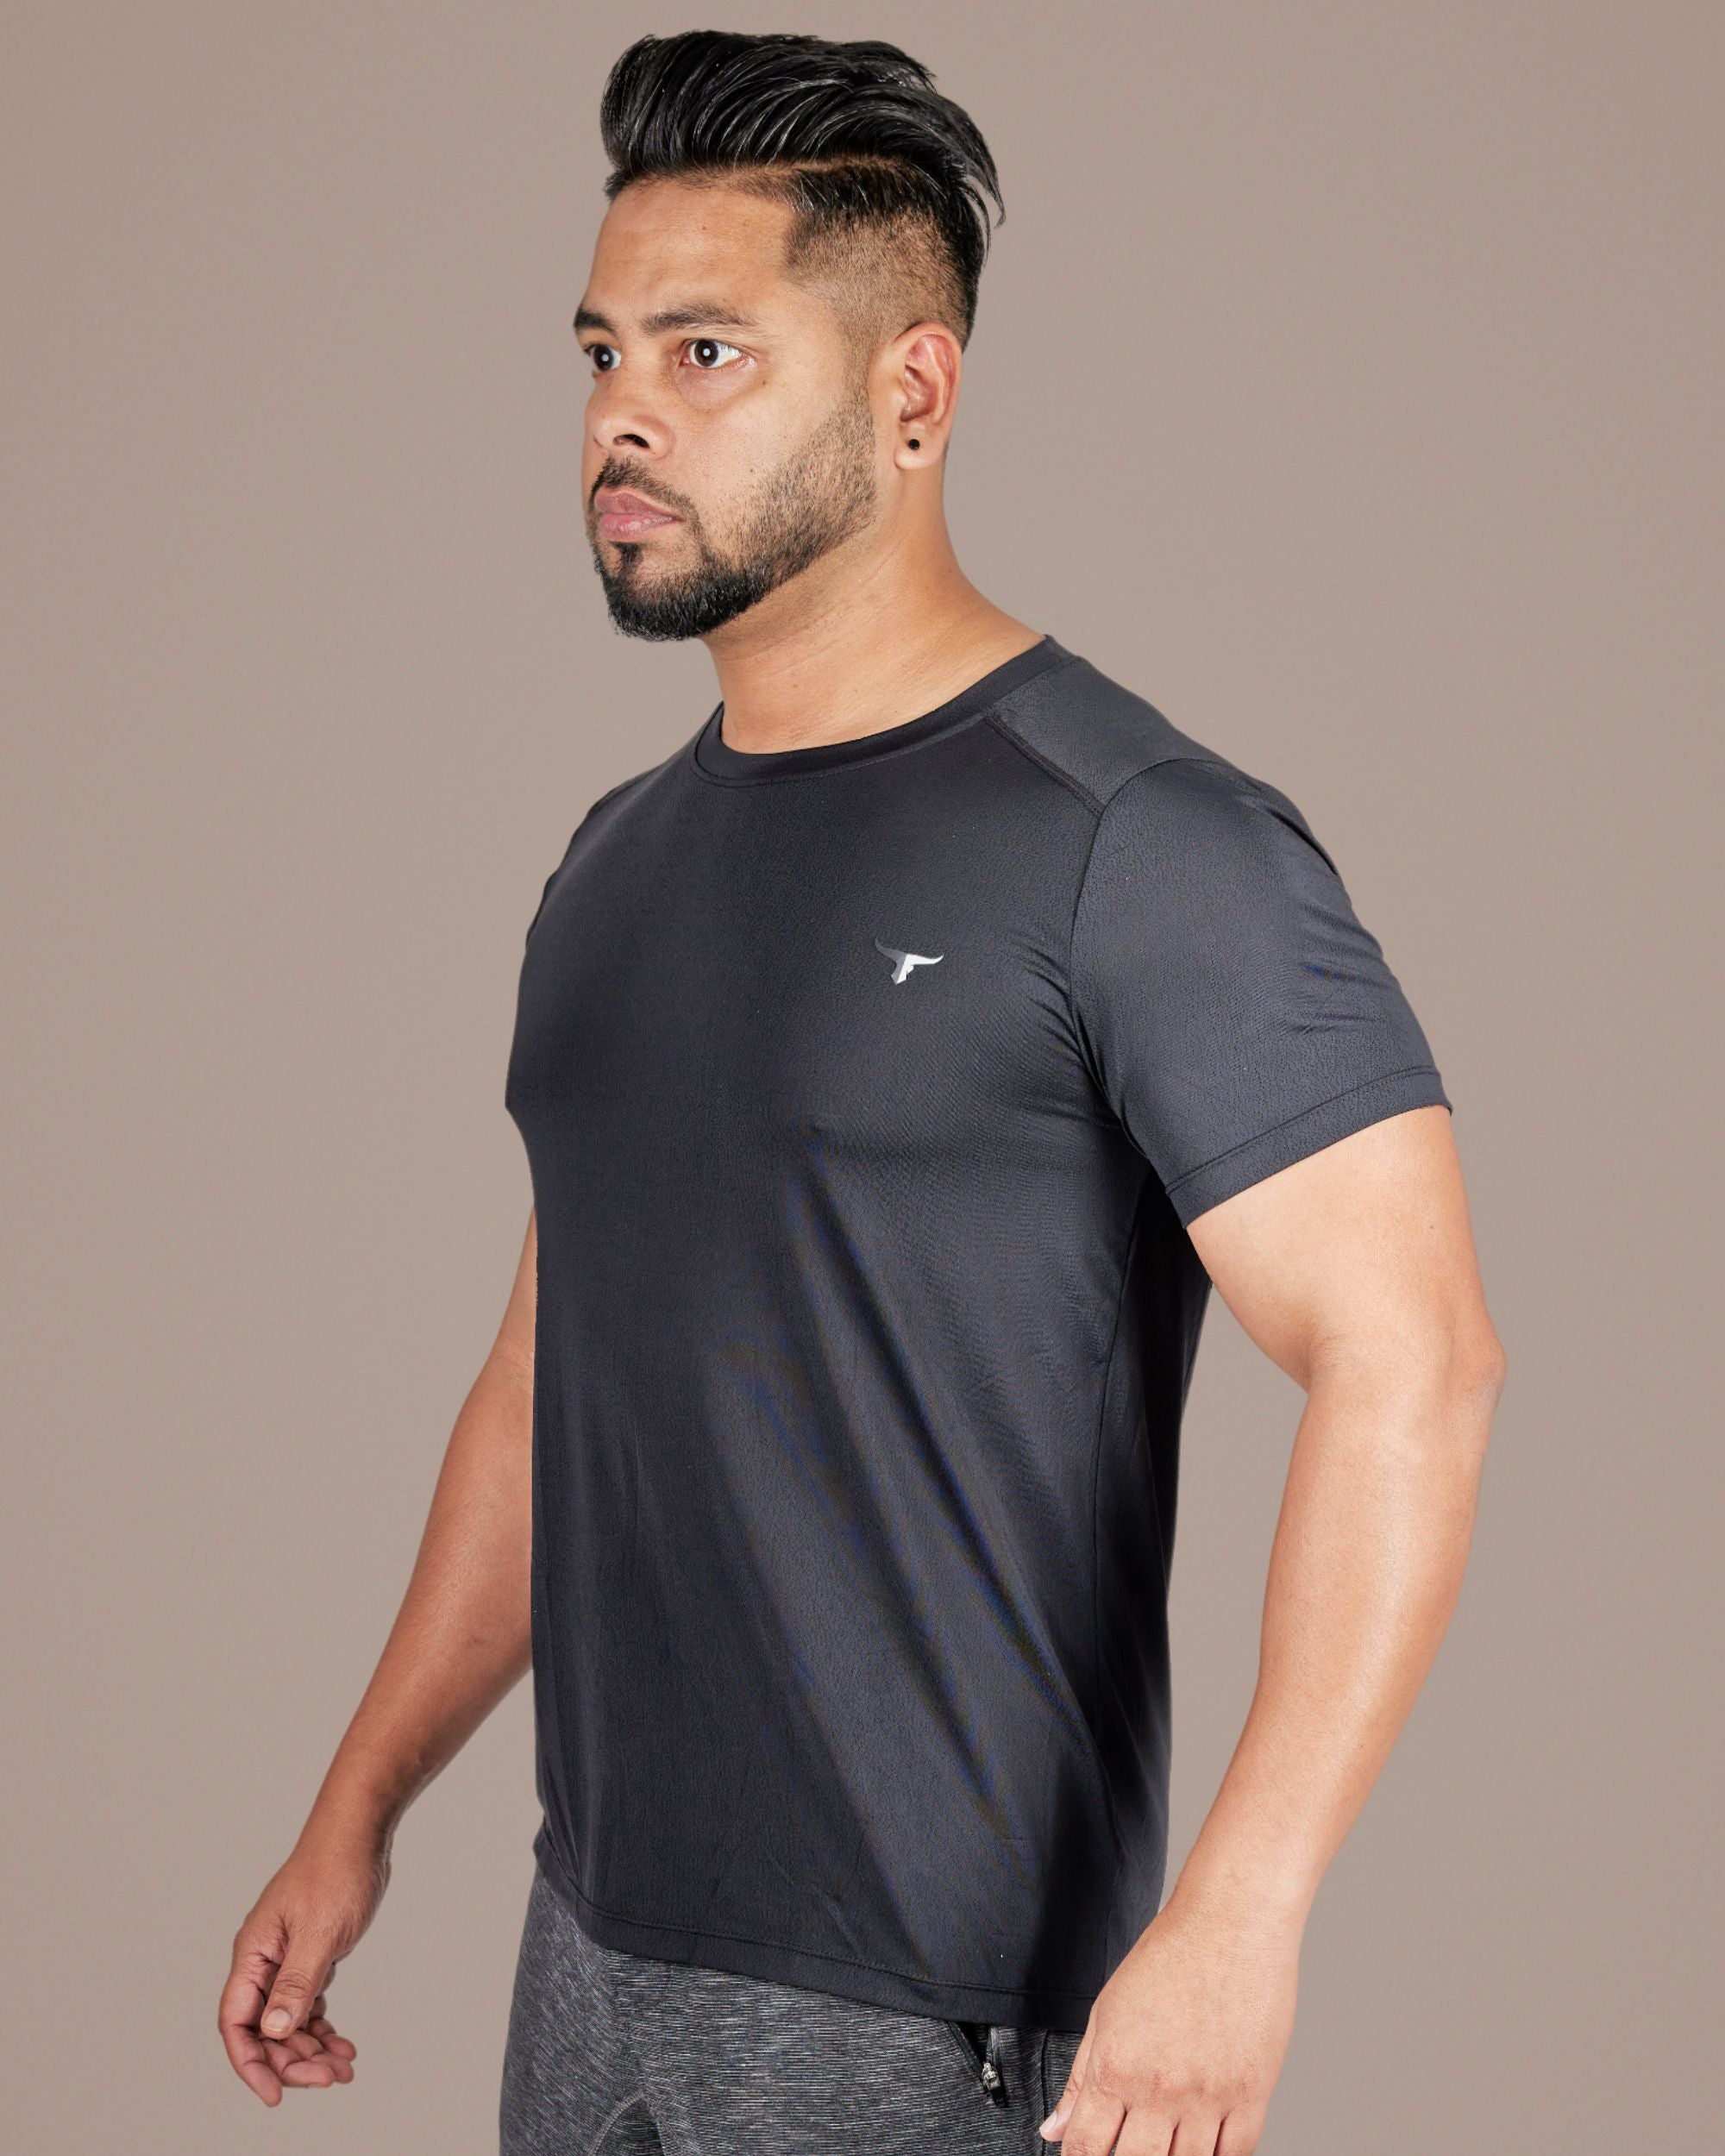 Men's Short Sleeve Workout Slim Fit T-Shirts - Black - THUGFIT